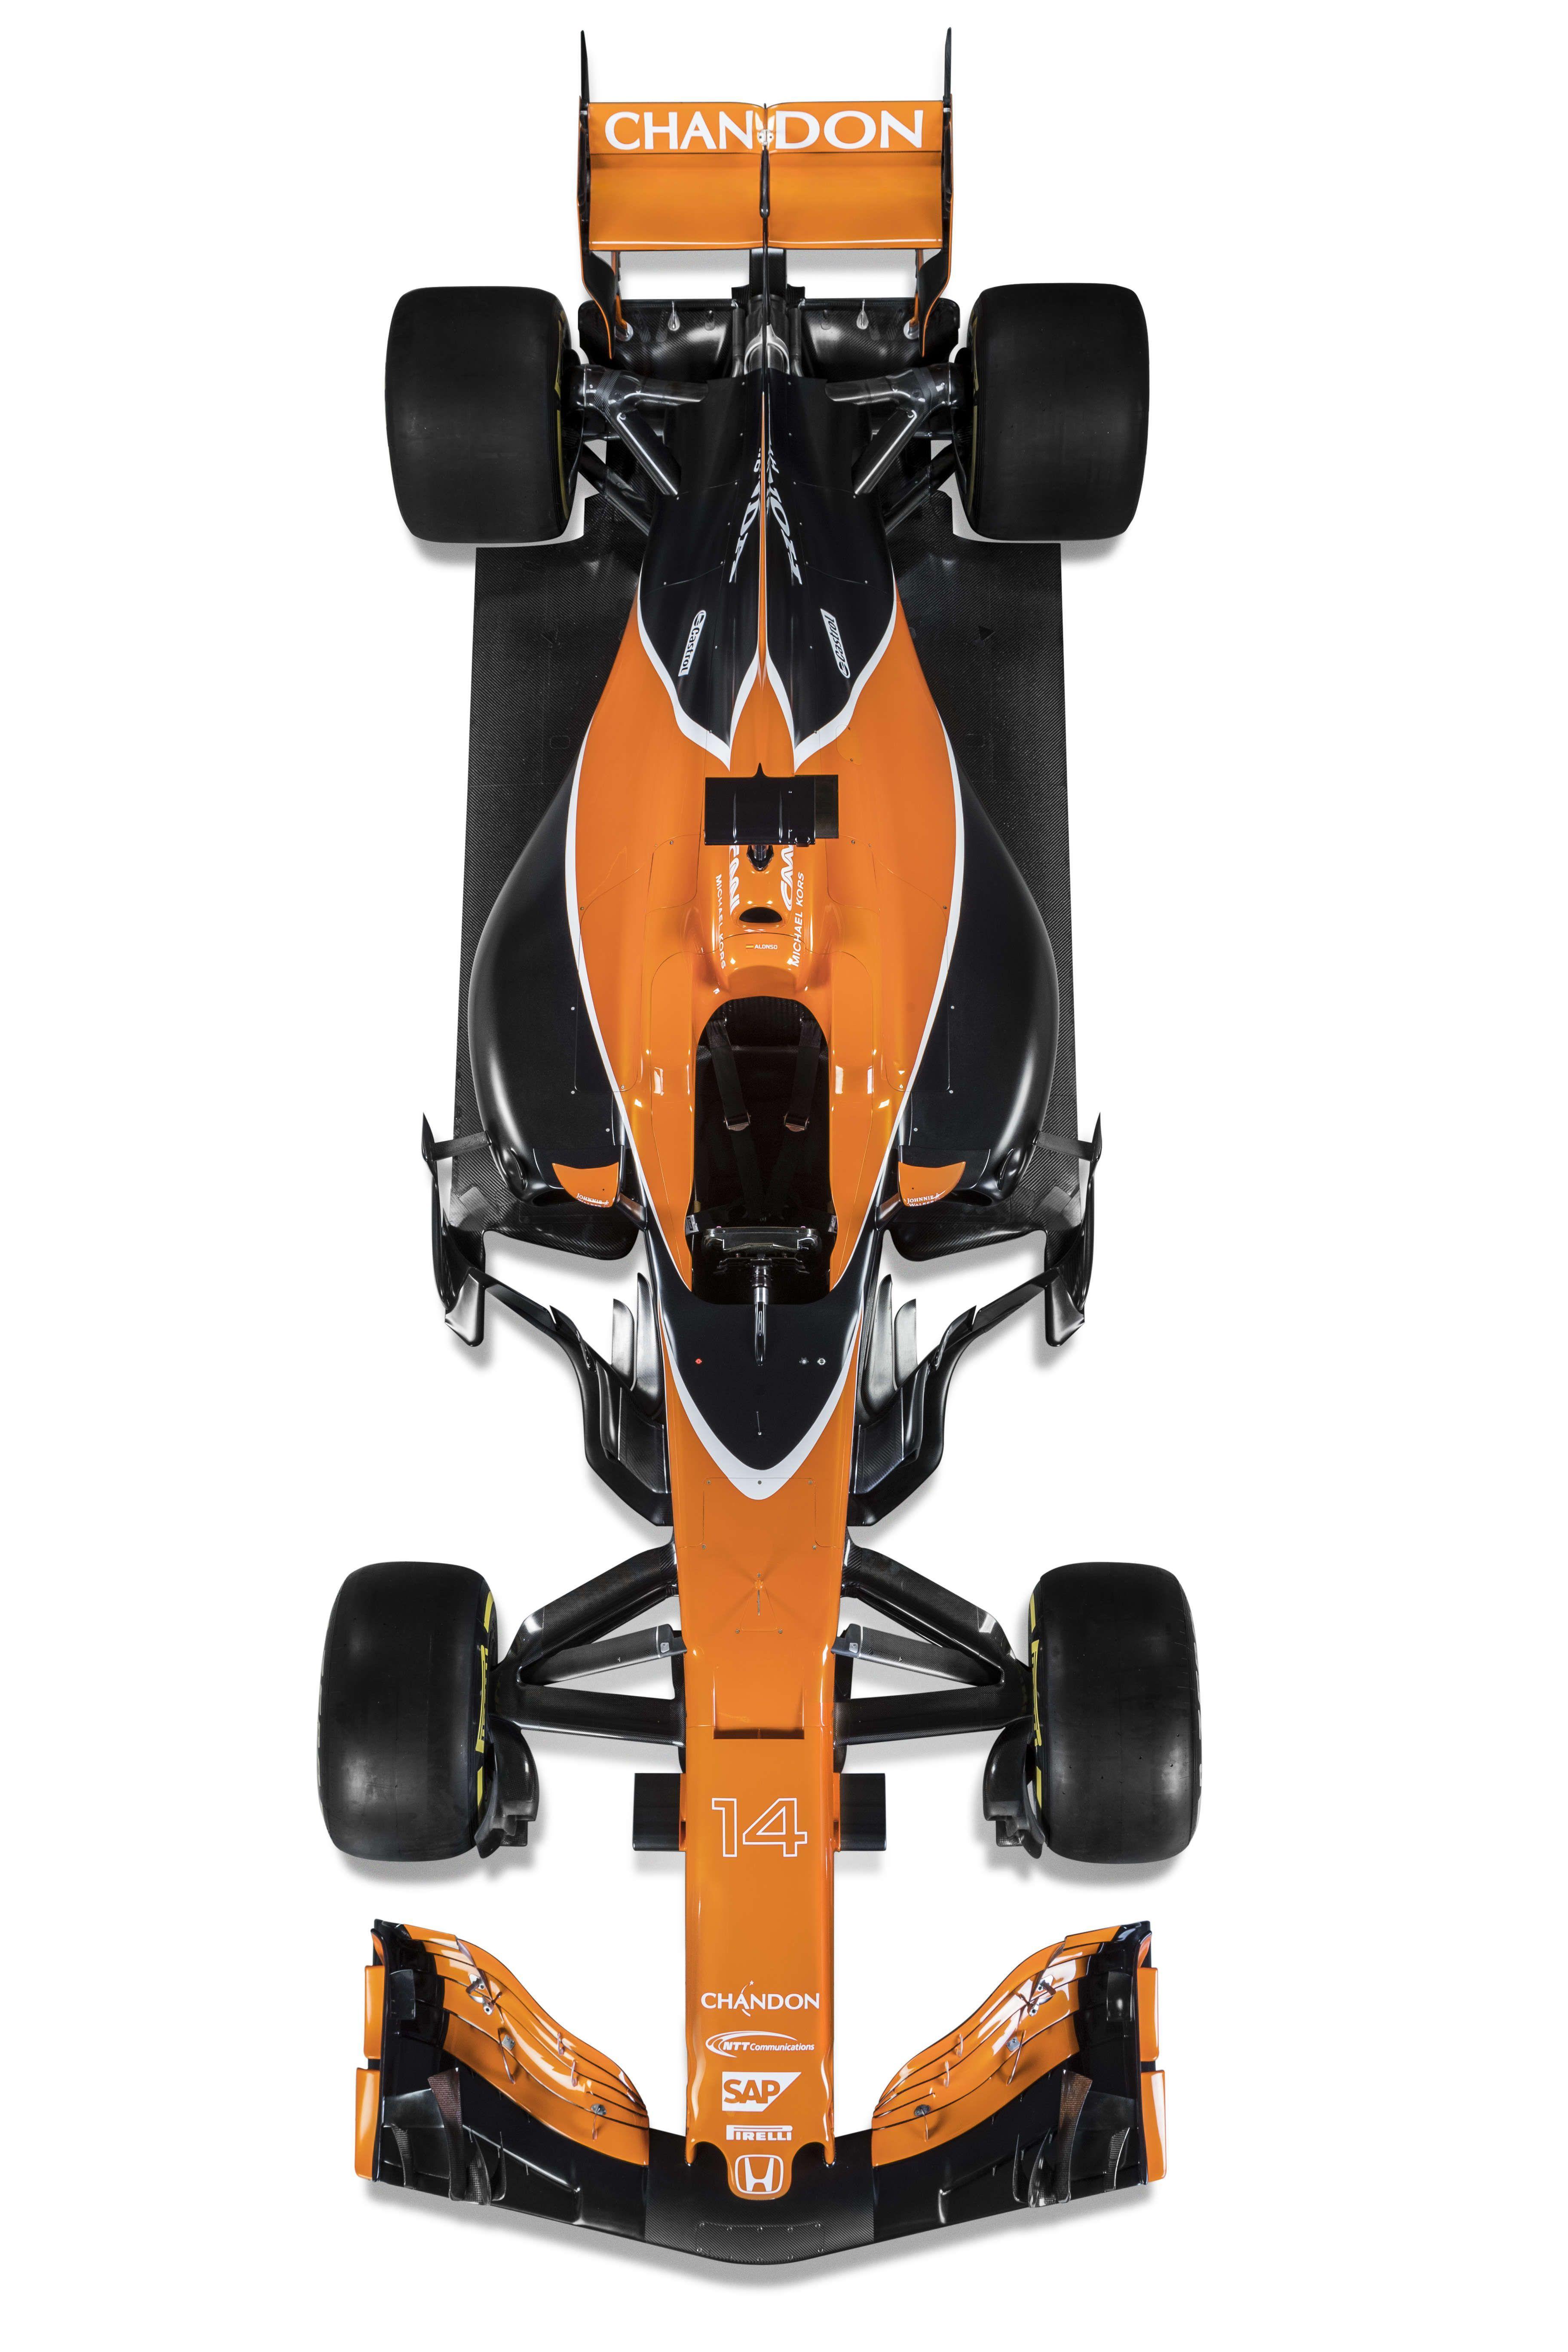 McLaren Honda Return To Classic Orange Livery With New MCL32